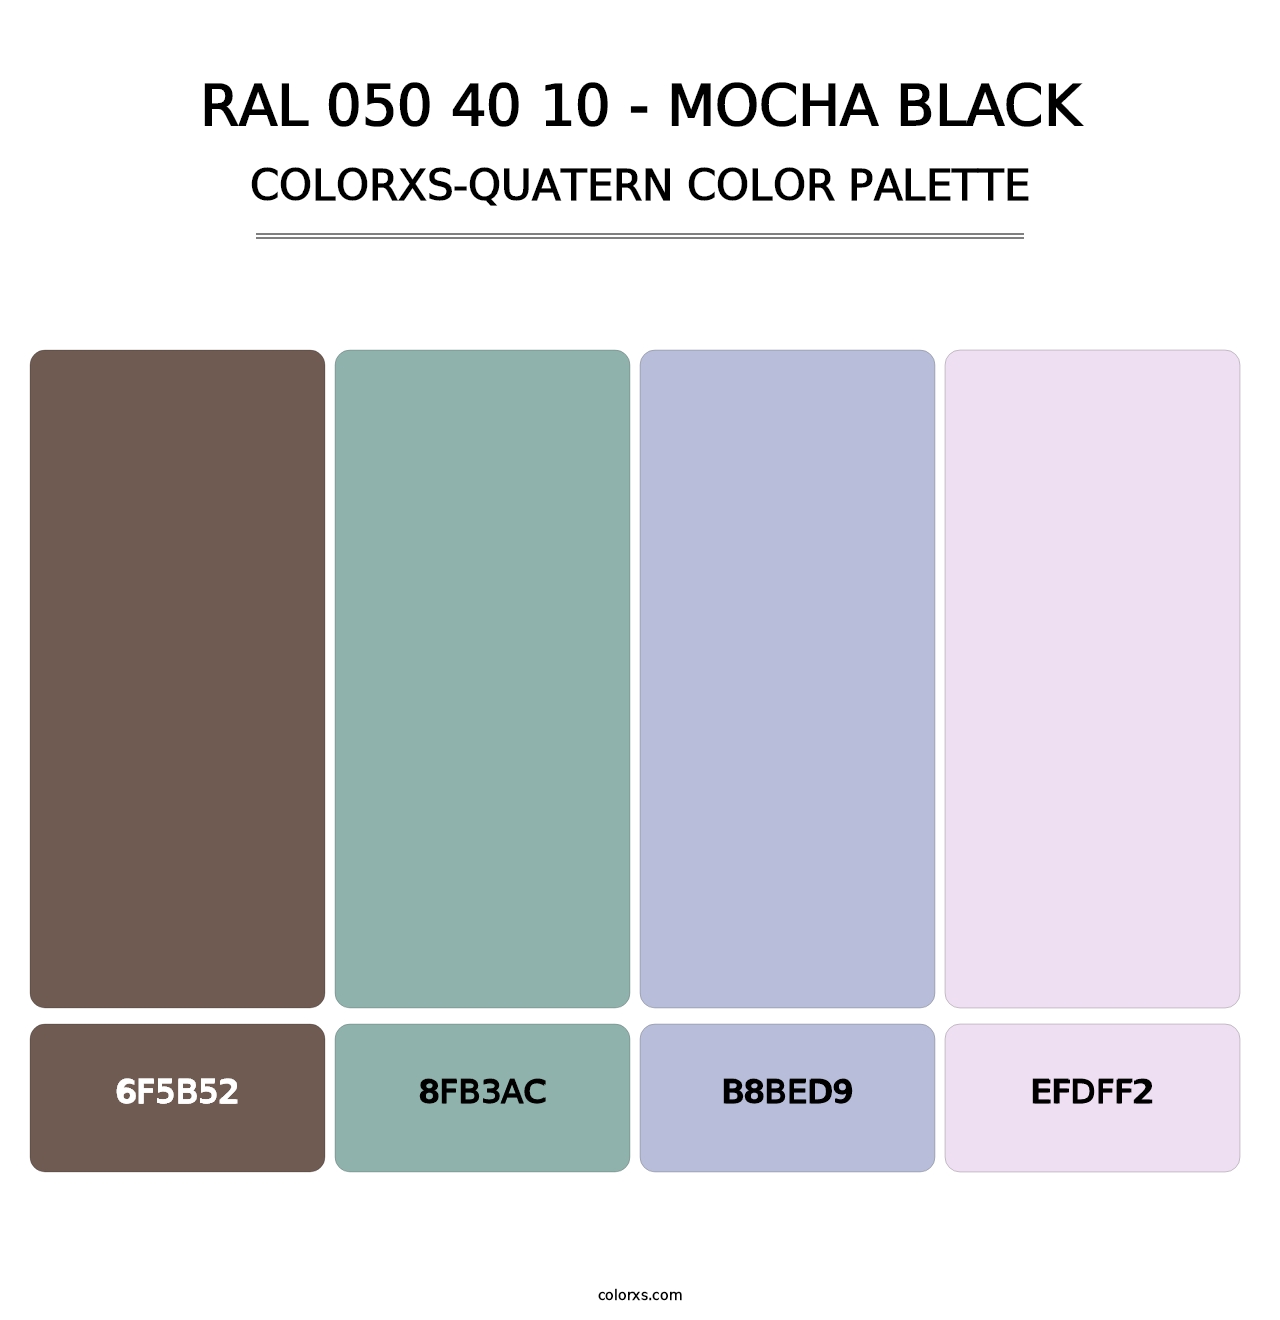 RAL 050 40 10 - Mocha Black - Colorxs Quatern Palette